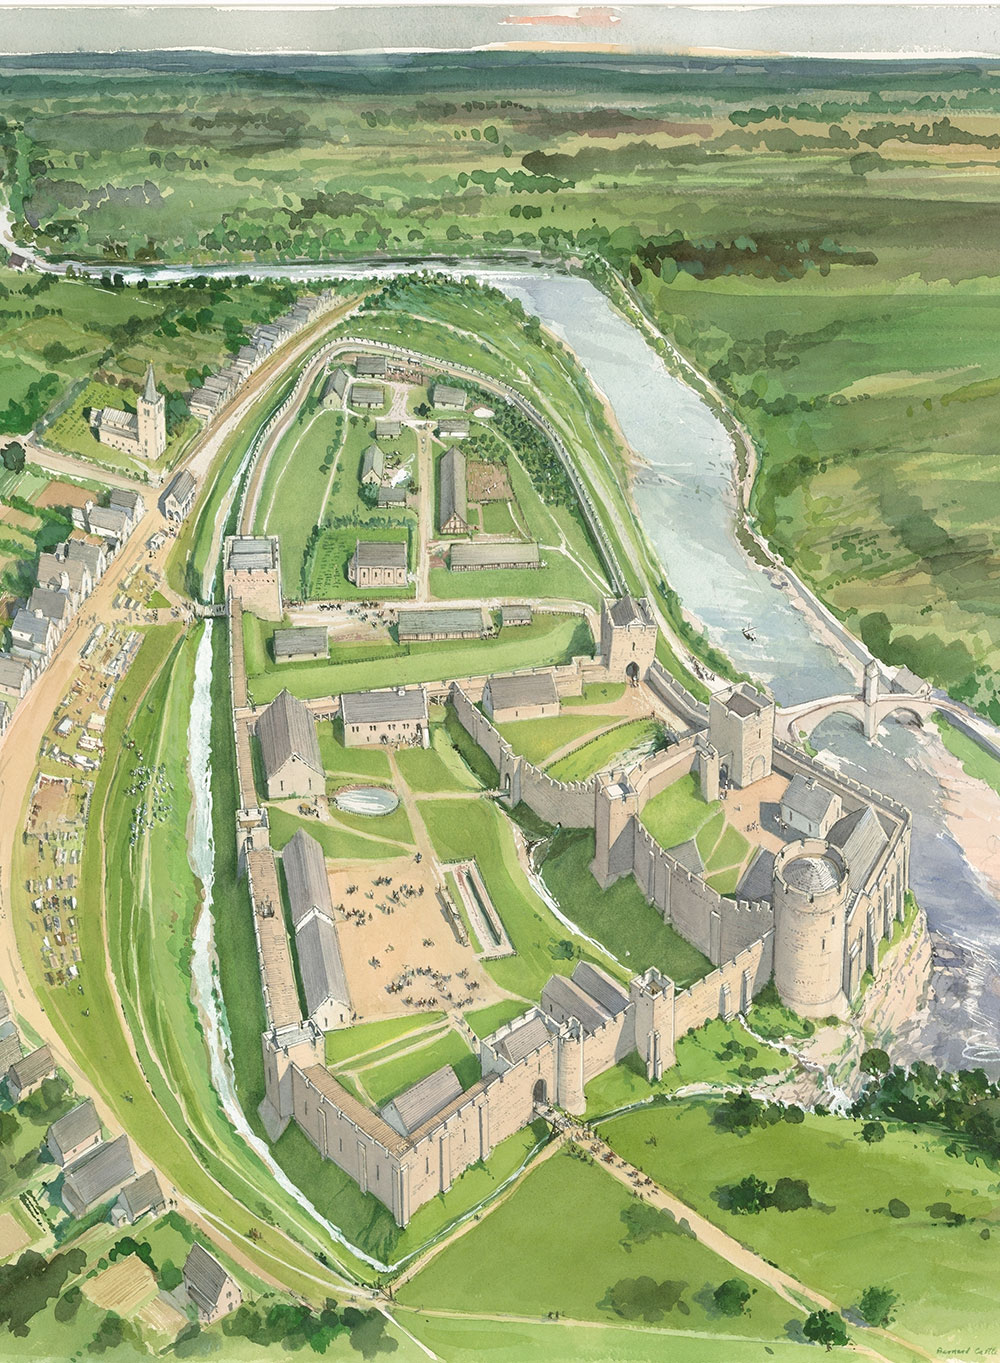 Aerial reconstruction illustration of Barnard Castle in the 13th century